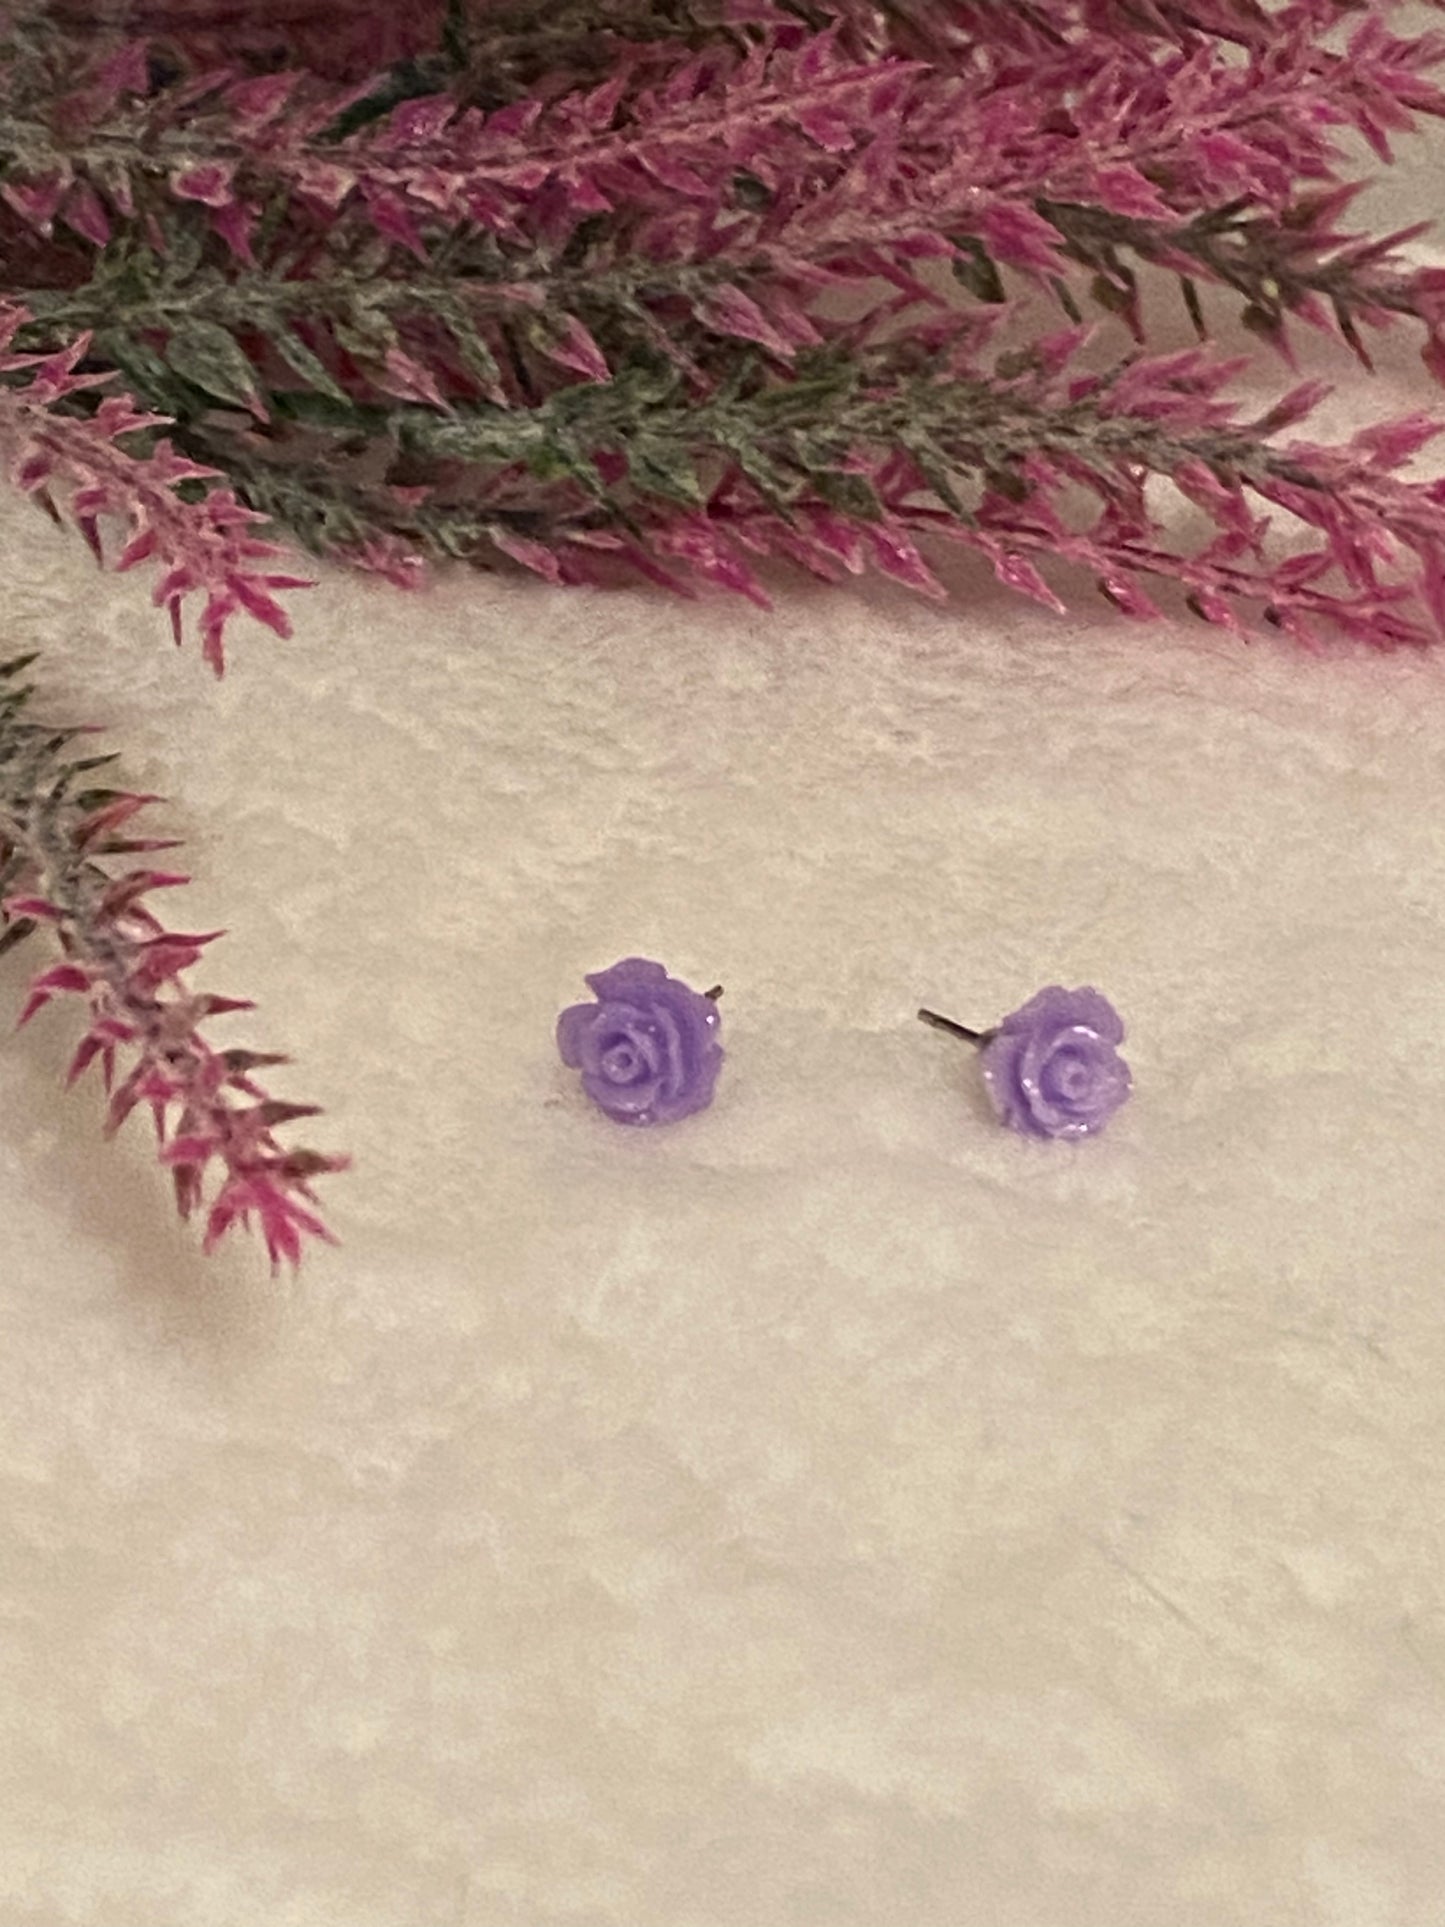 Purple Rose